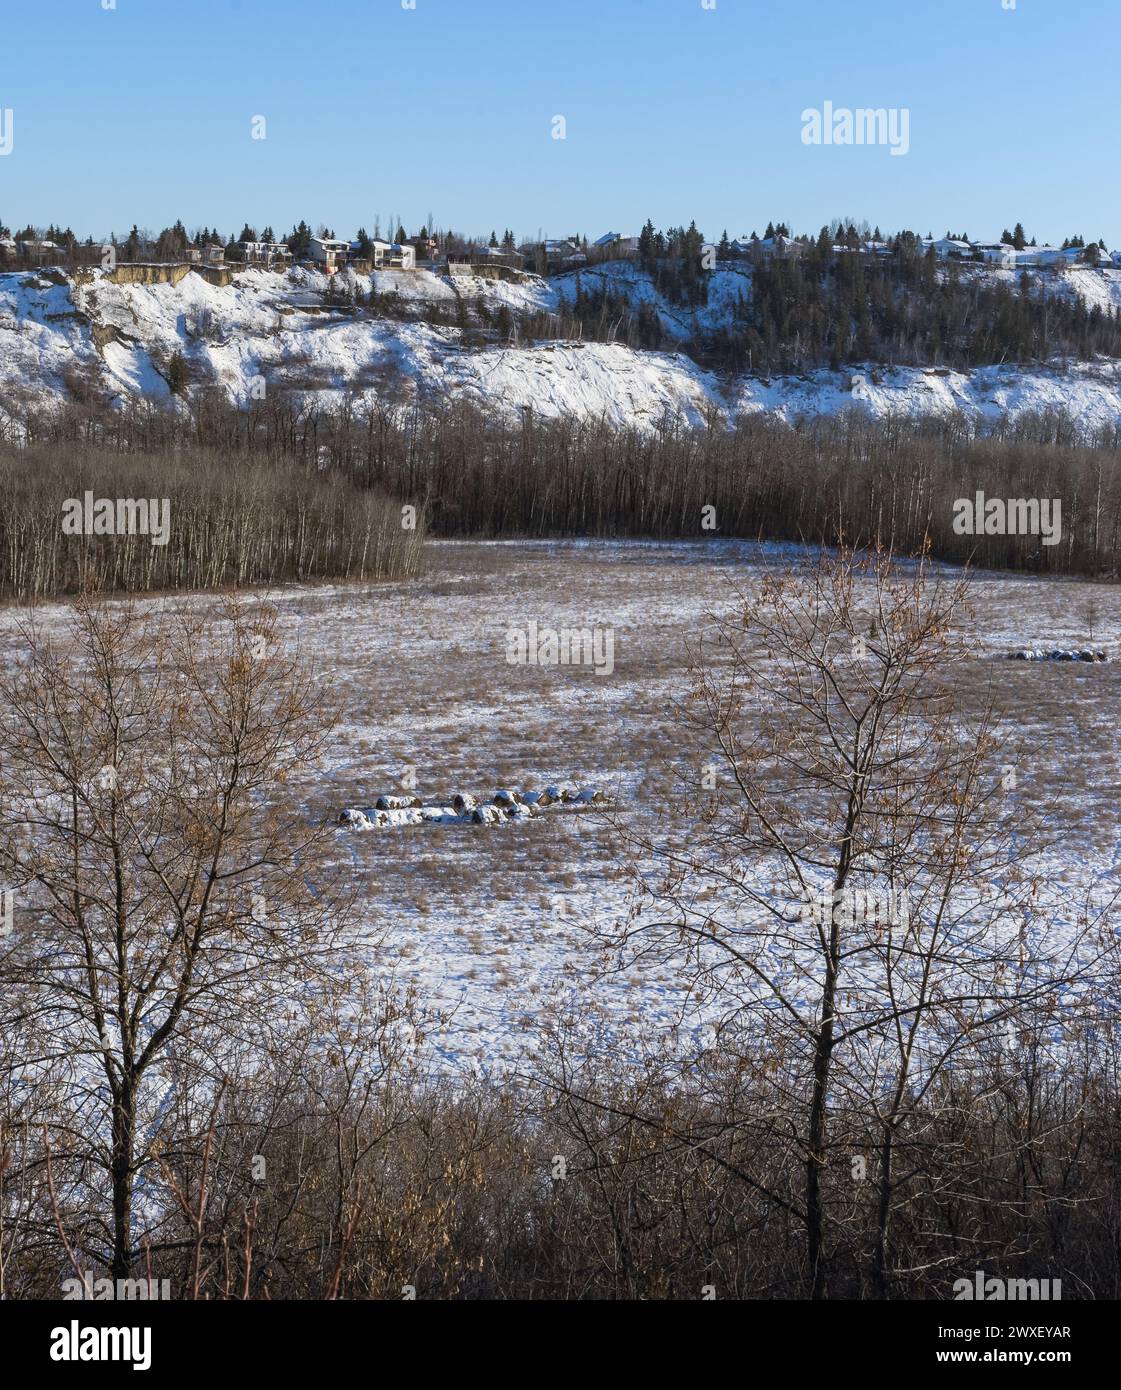 North Saskatchewan river valley field winter landscape with hay bales Stock Photo